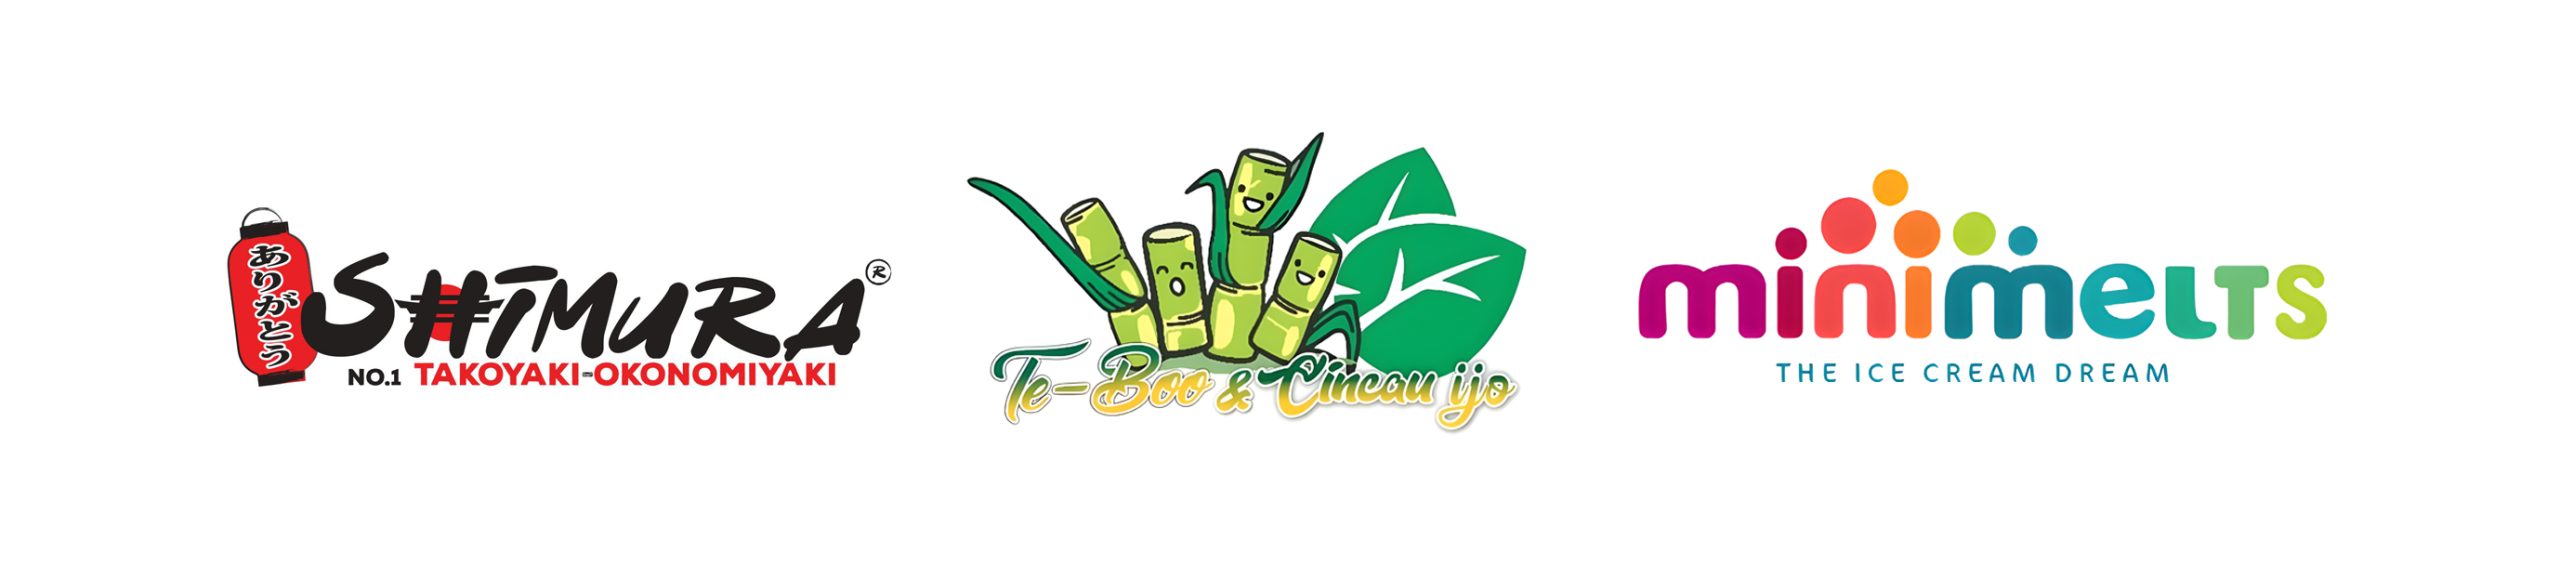 Logo Tiong Bahru Web6